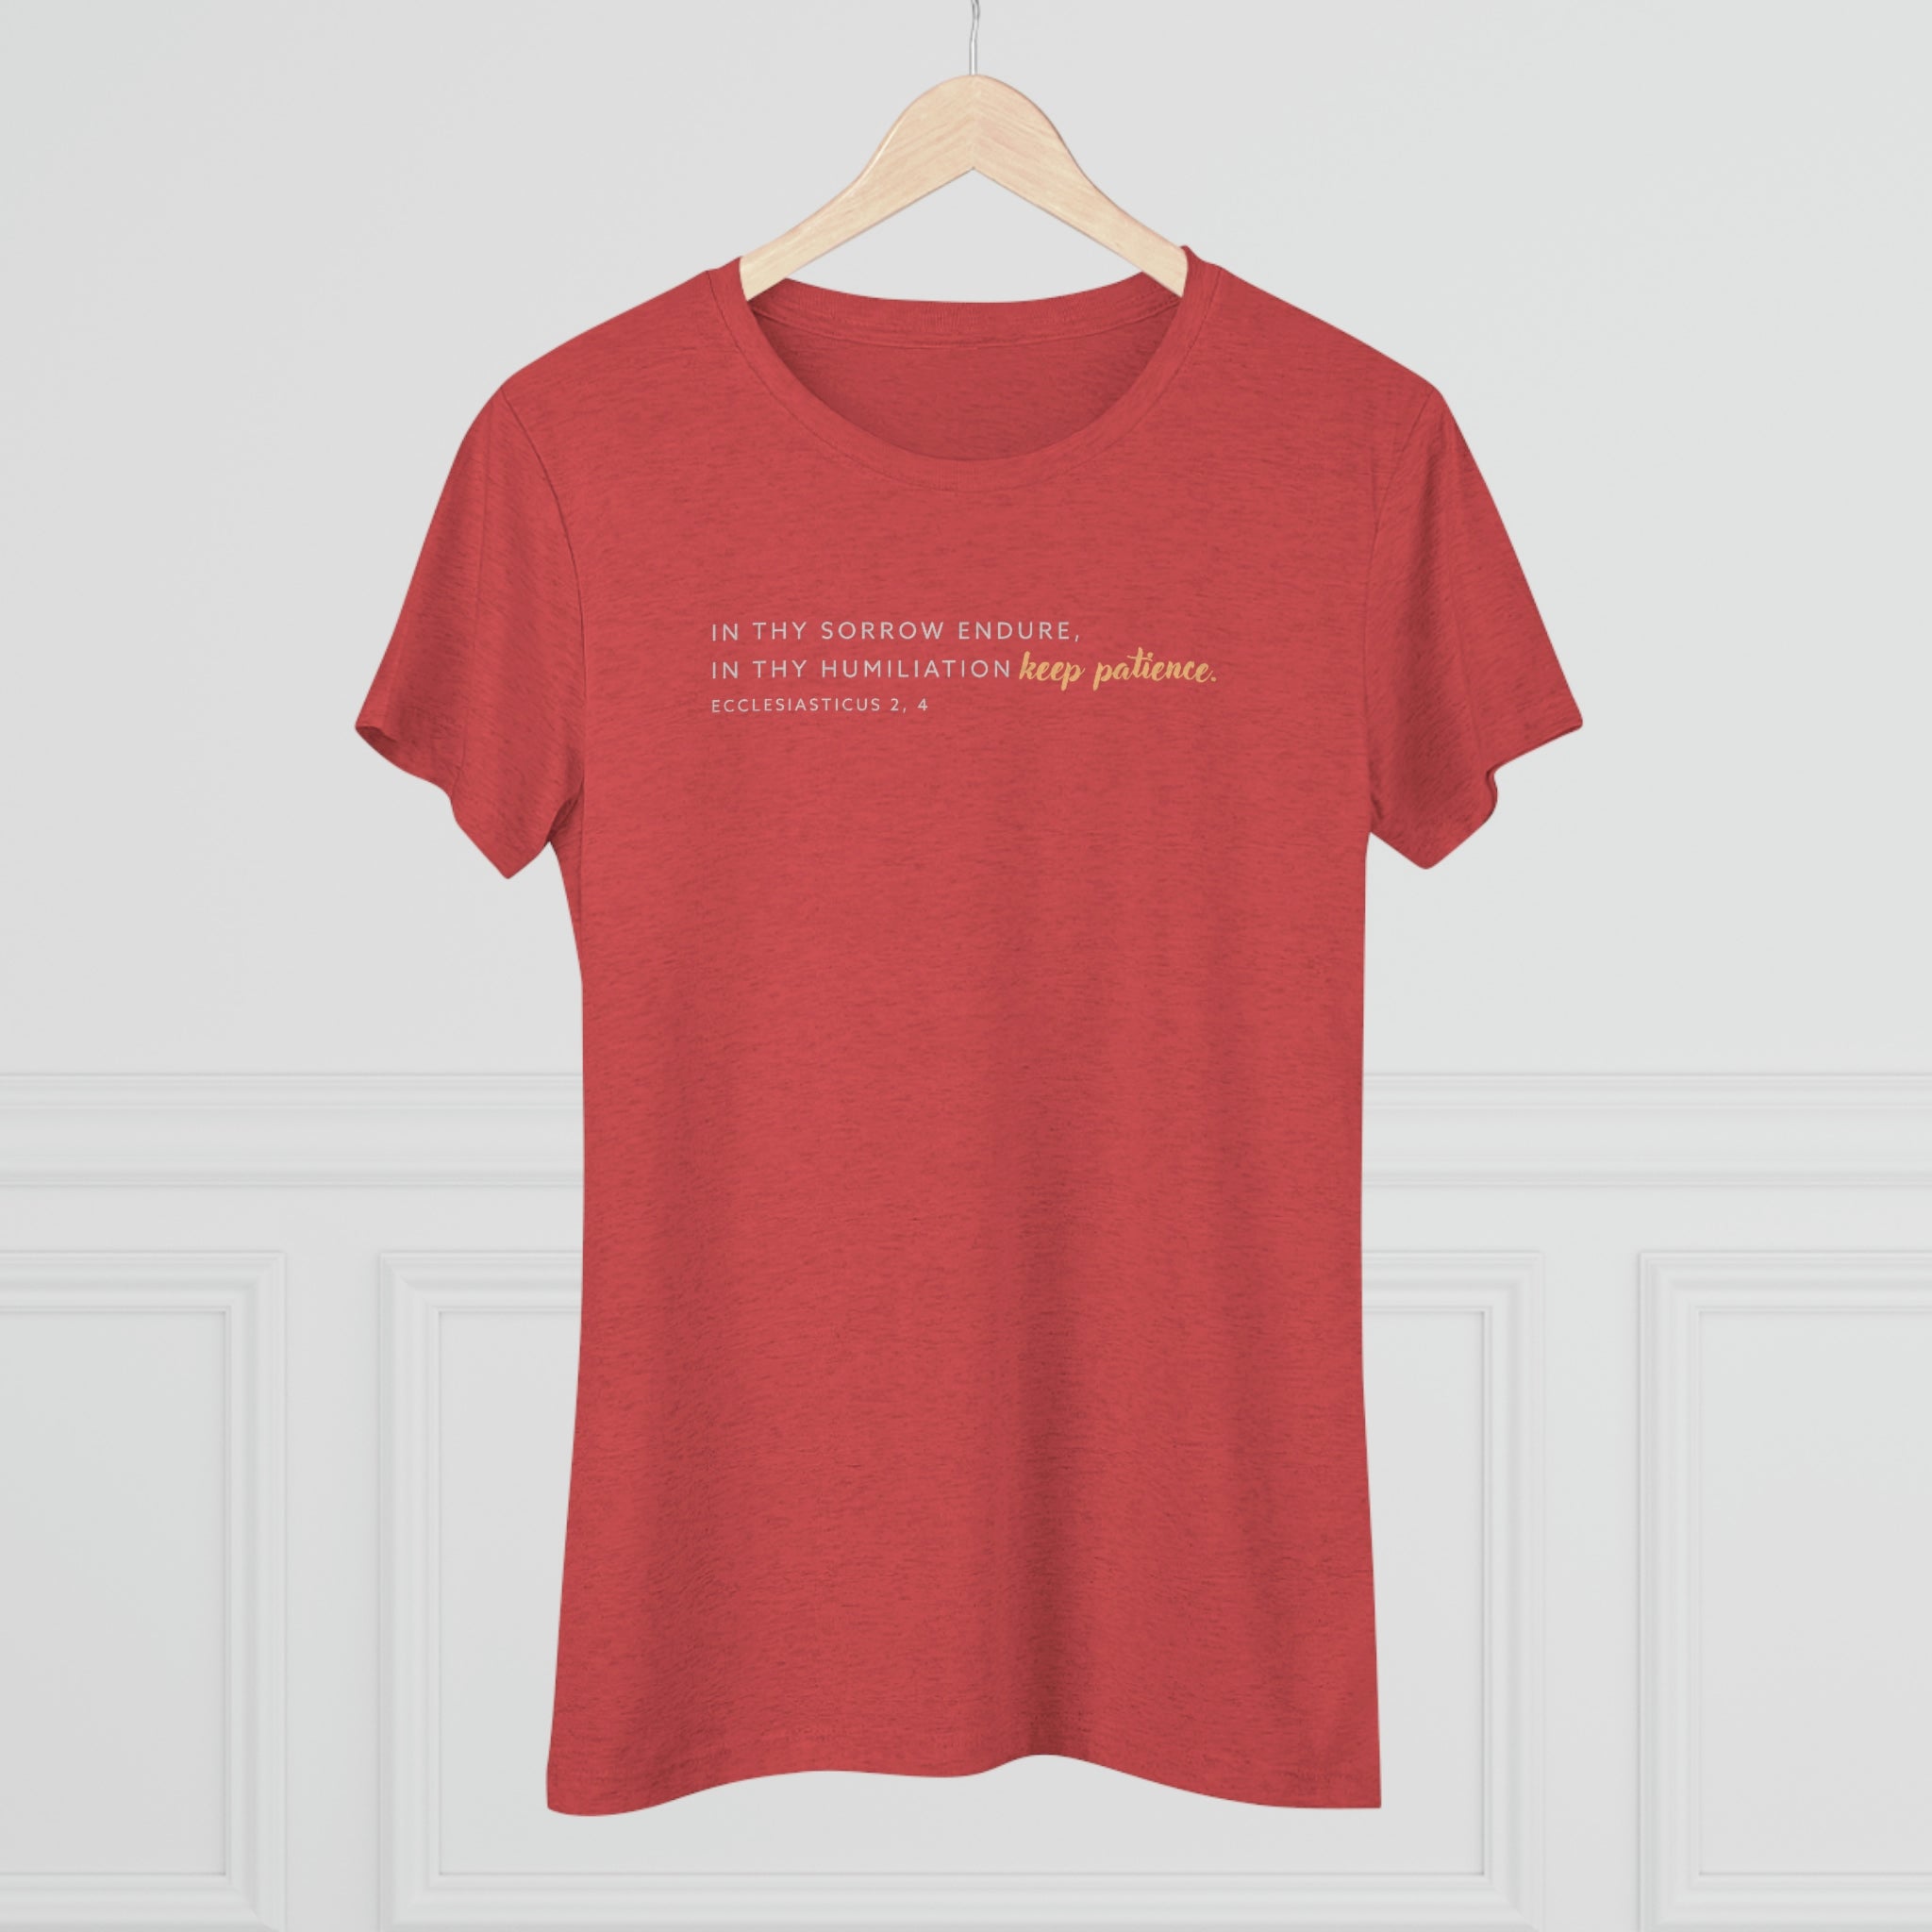 Women's Keep Patience Premium T-shirt